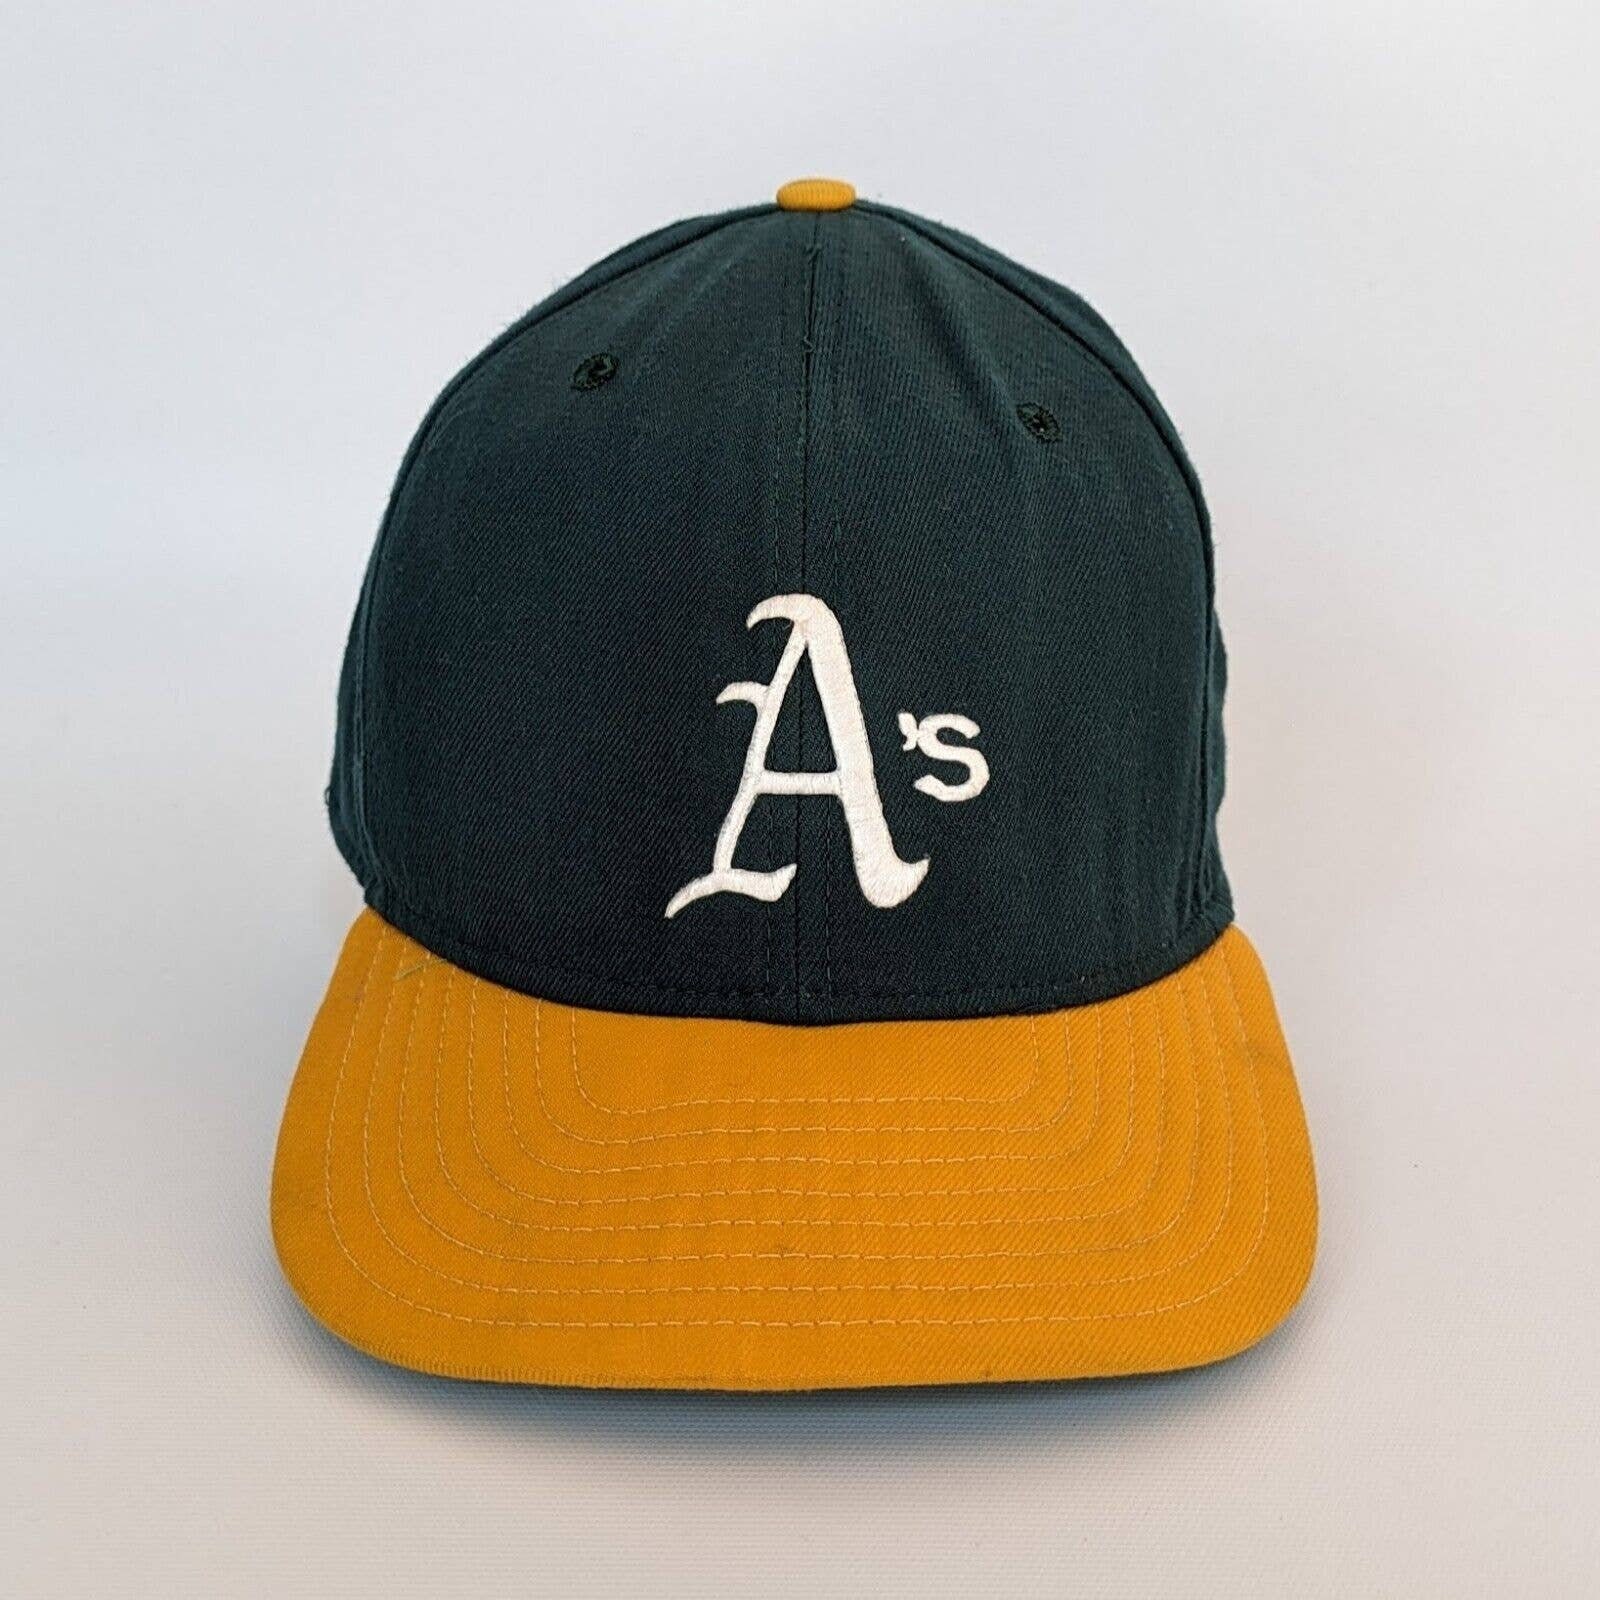 Vintage Oakland A's (Athletics) Baseball Hat - Adjustable Pro Model Medium/Large